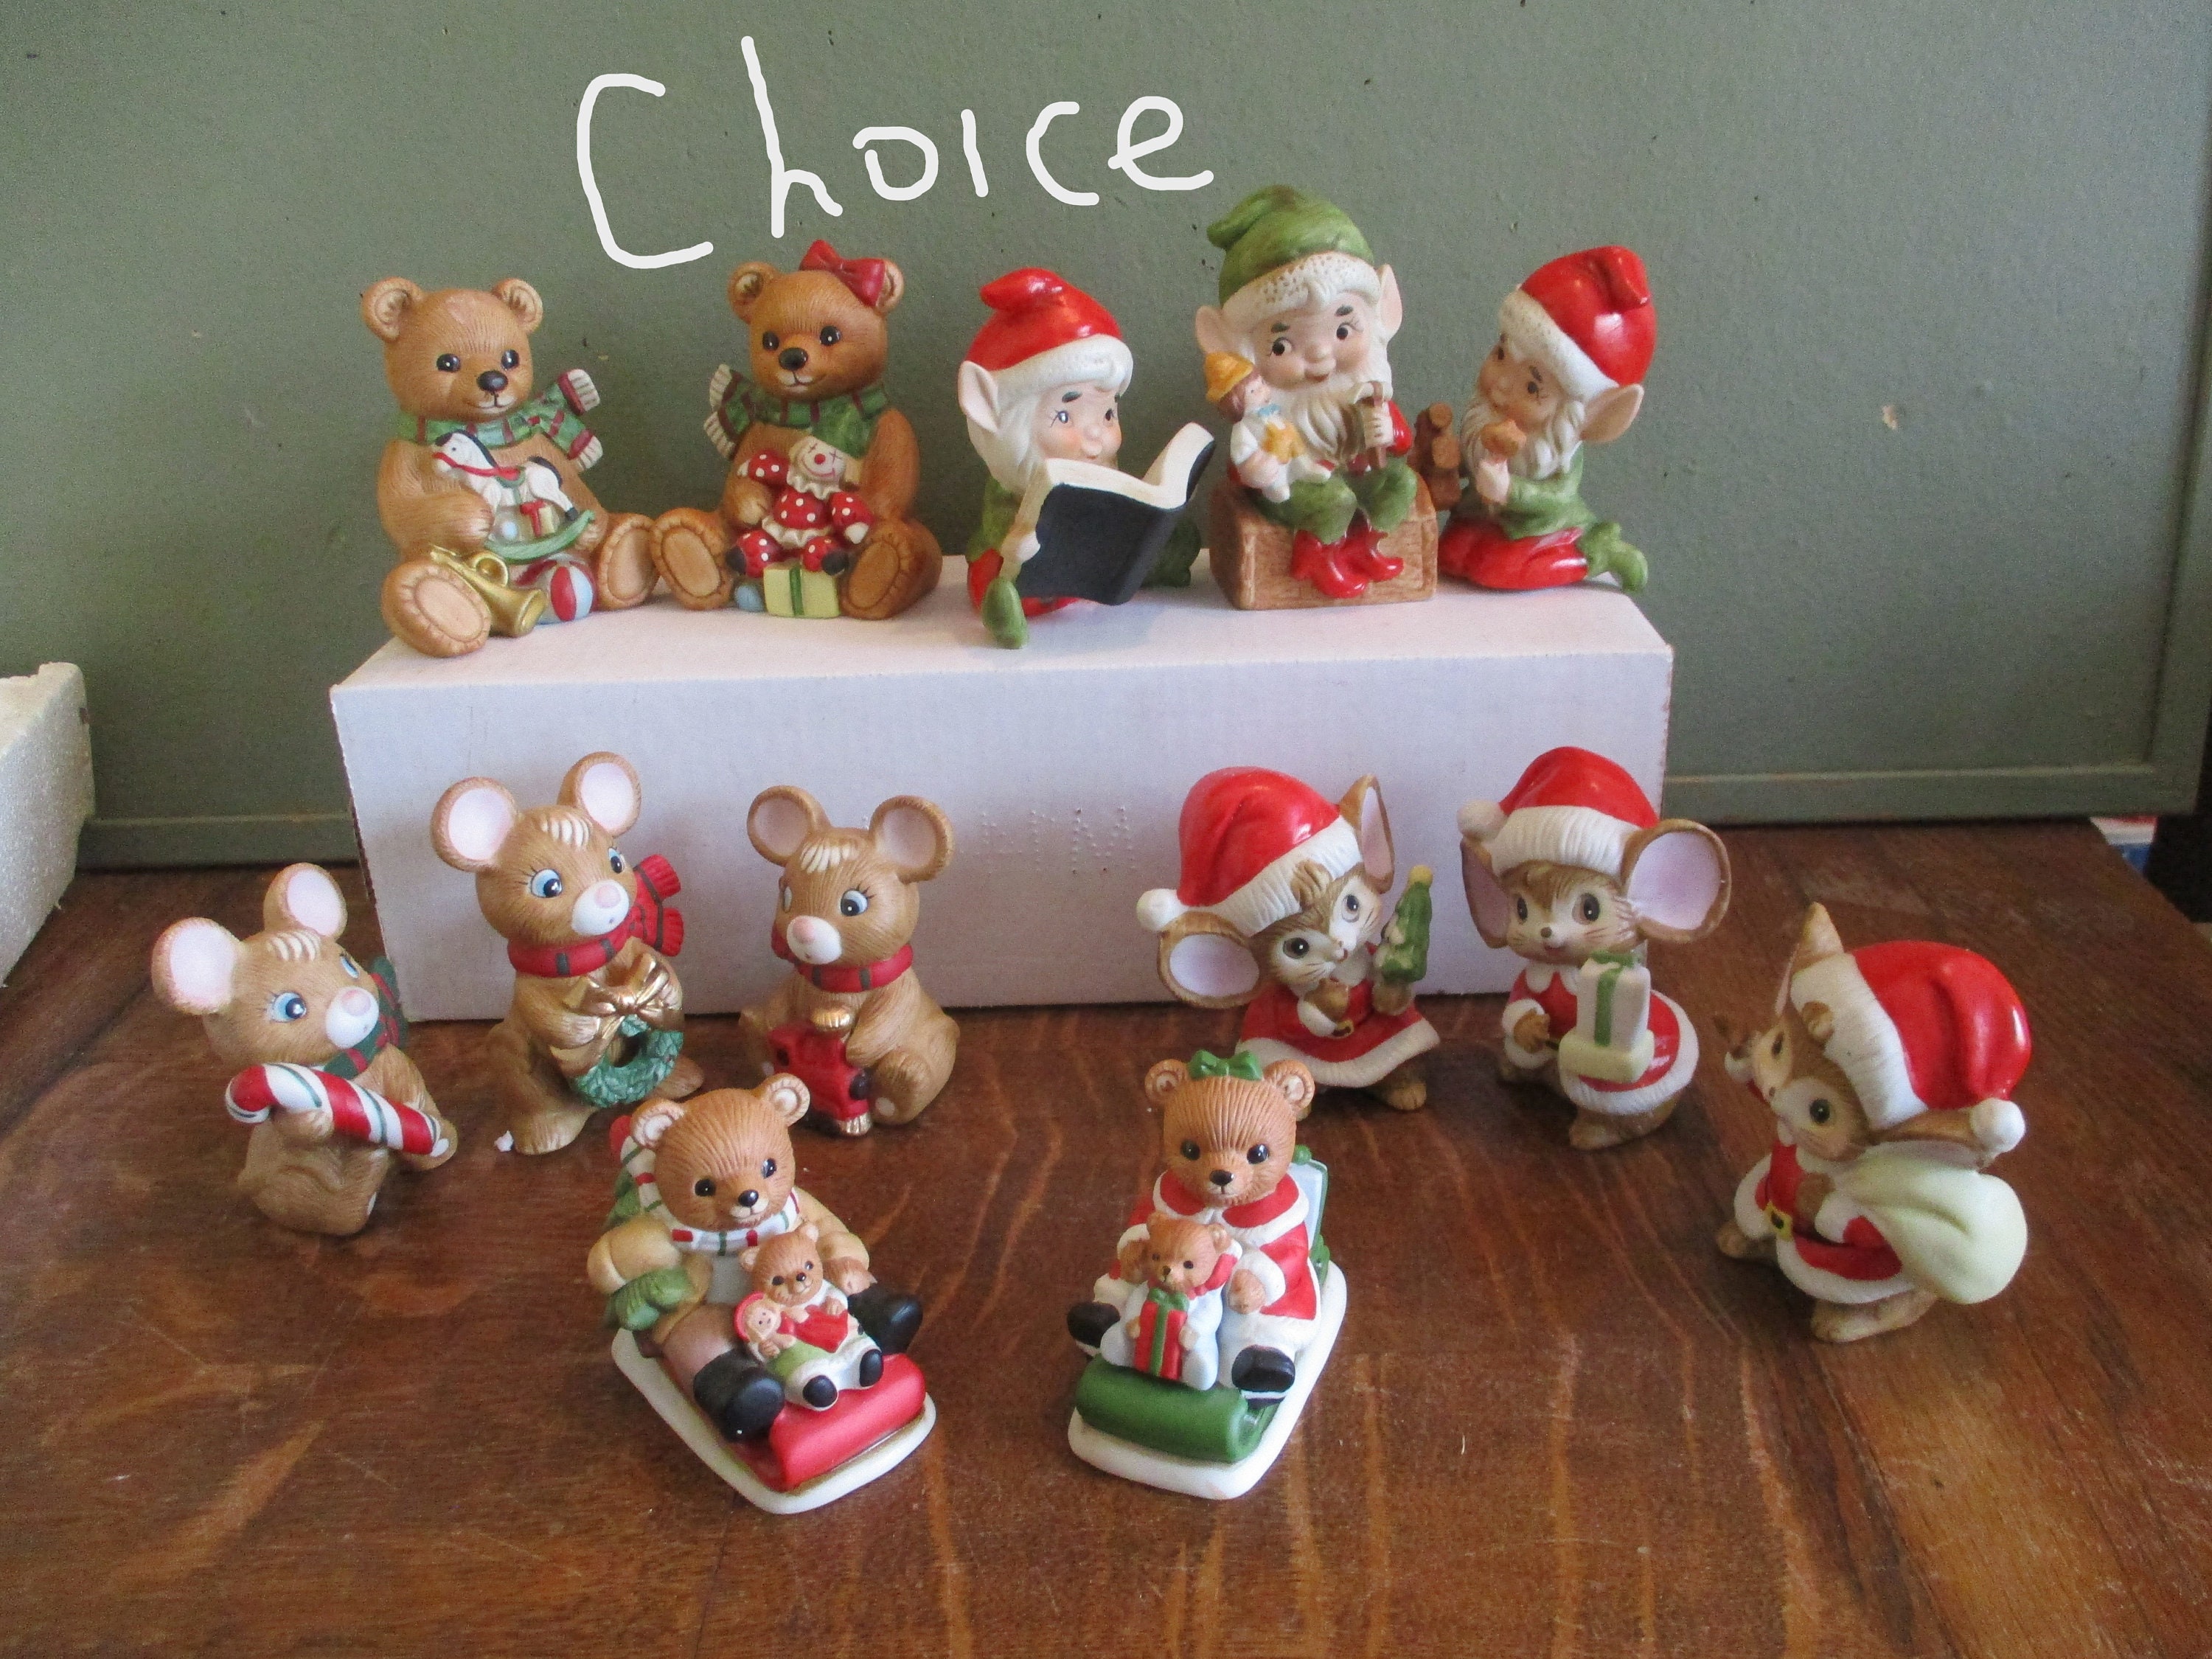 NorthPoleXpress Premium Mini Wooden Christmas Tree Ornaments - Set of 48 Ornament Figures Advent Calendar Stuffers Fillers - Santa Claus Snowman